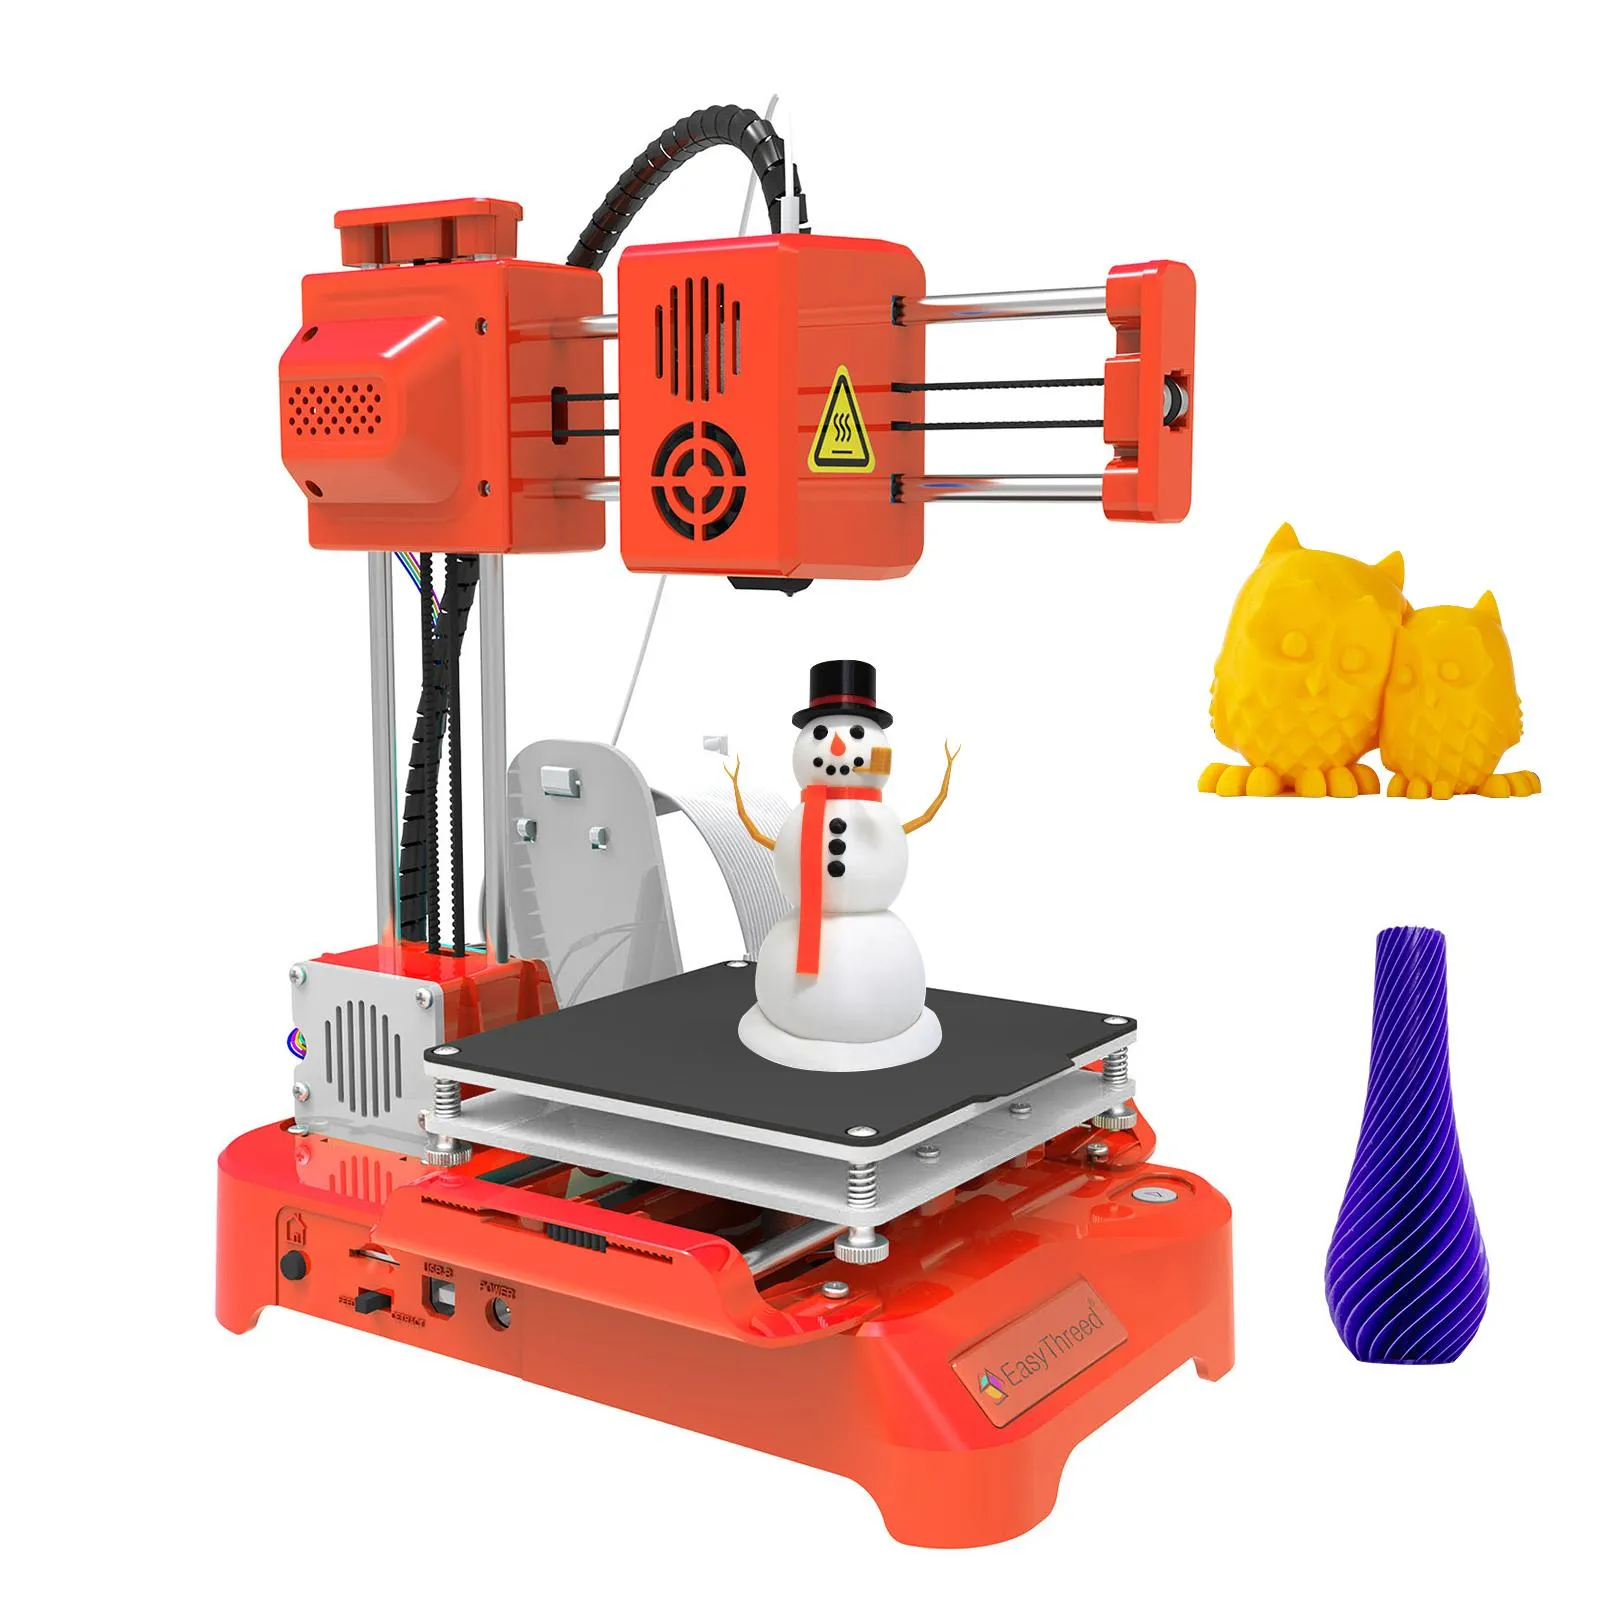 Принтер Easythreed Mini Desktop 3D Printer для детей 3D Printer 100x100x100 мм размер печати без кровати с подогревом.